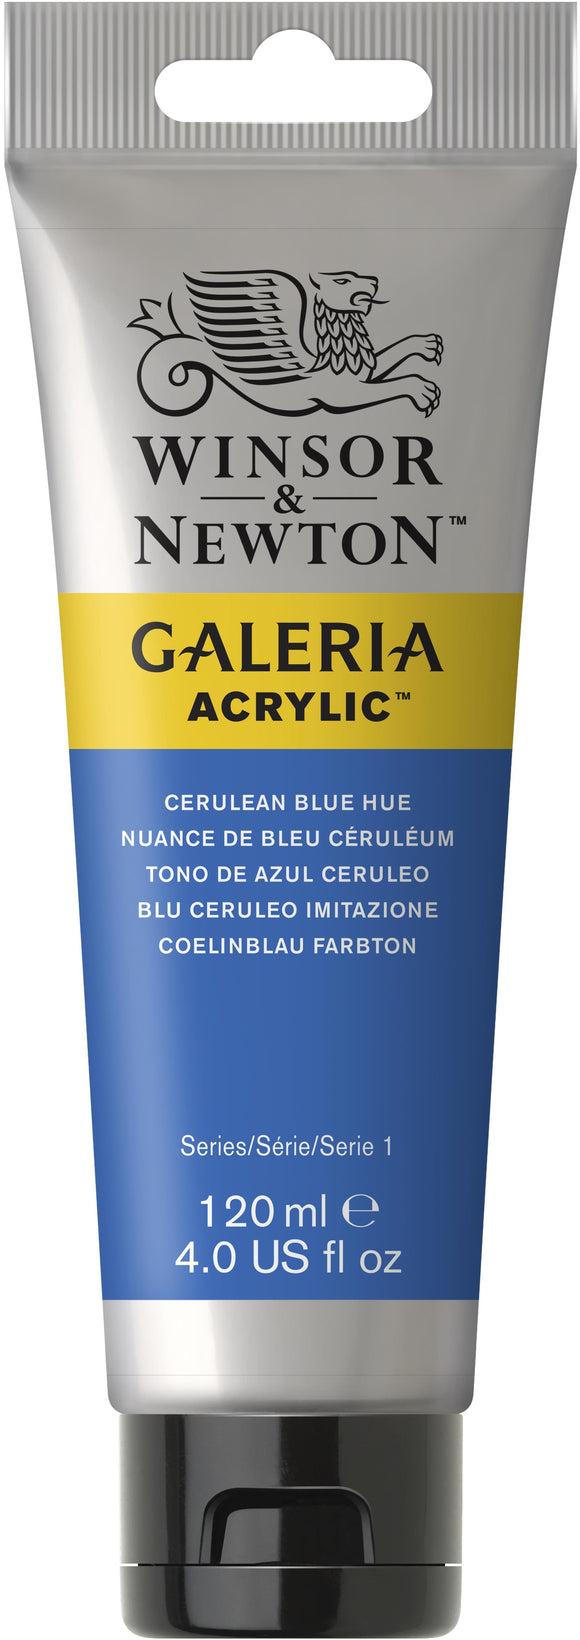 Winsor & Newton Galeria Acrylic Cerulean Blue Hue 120Ml